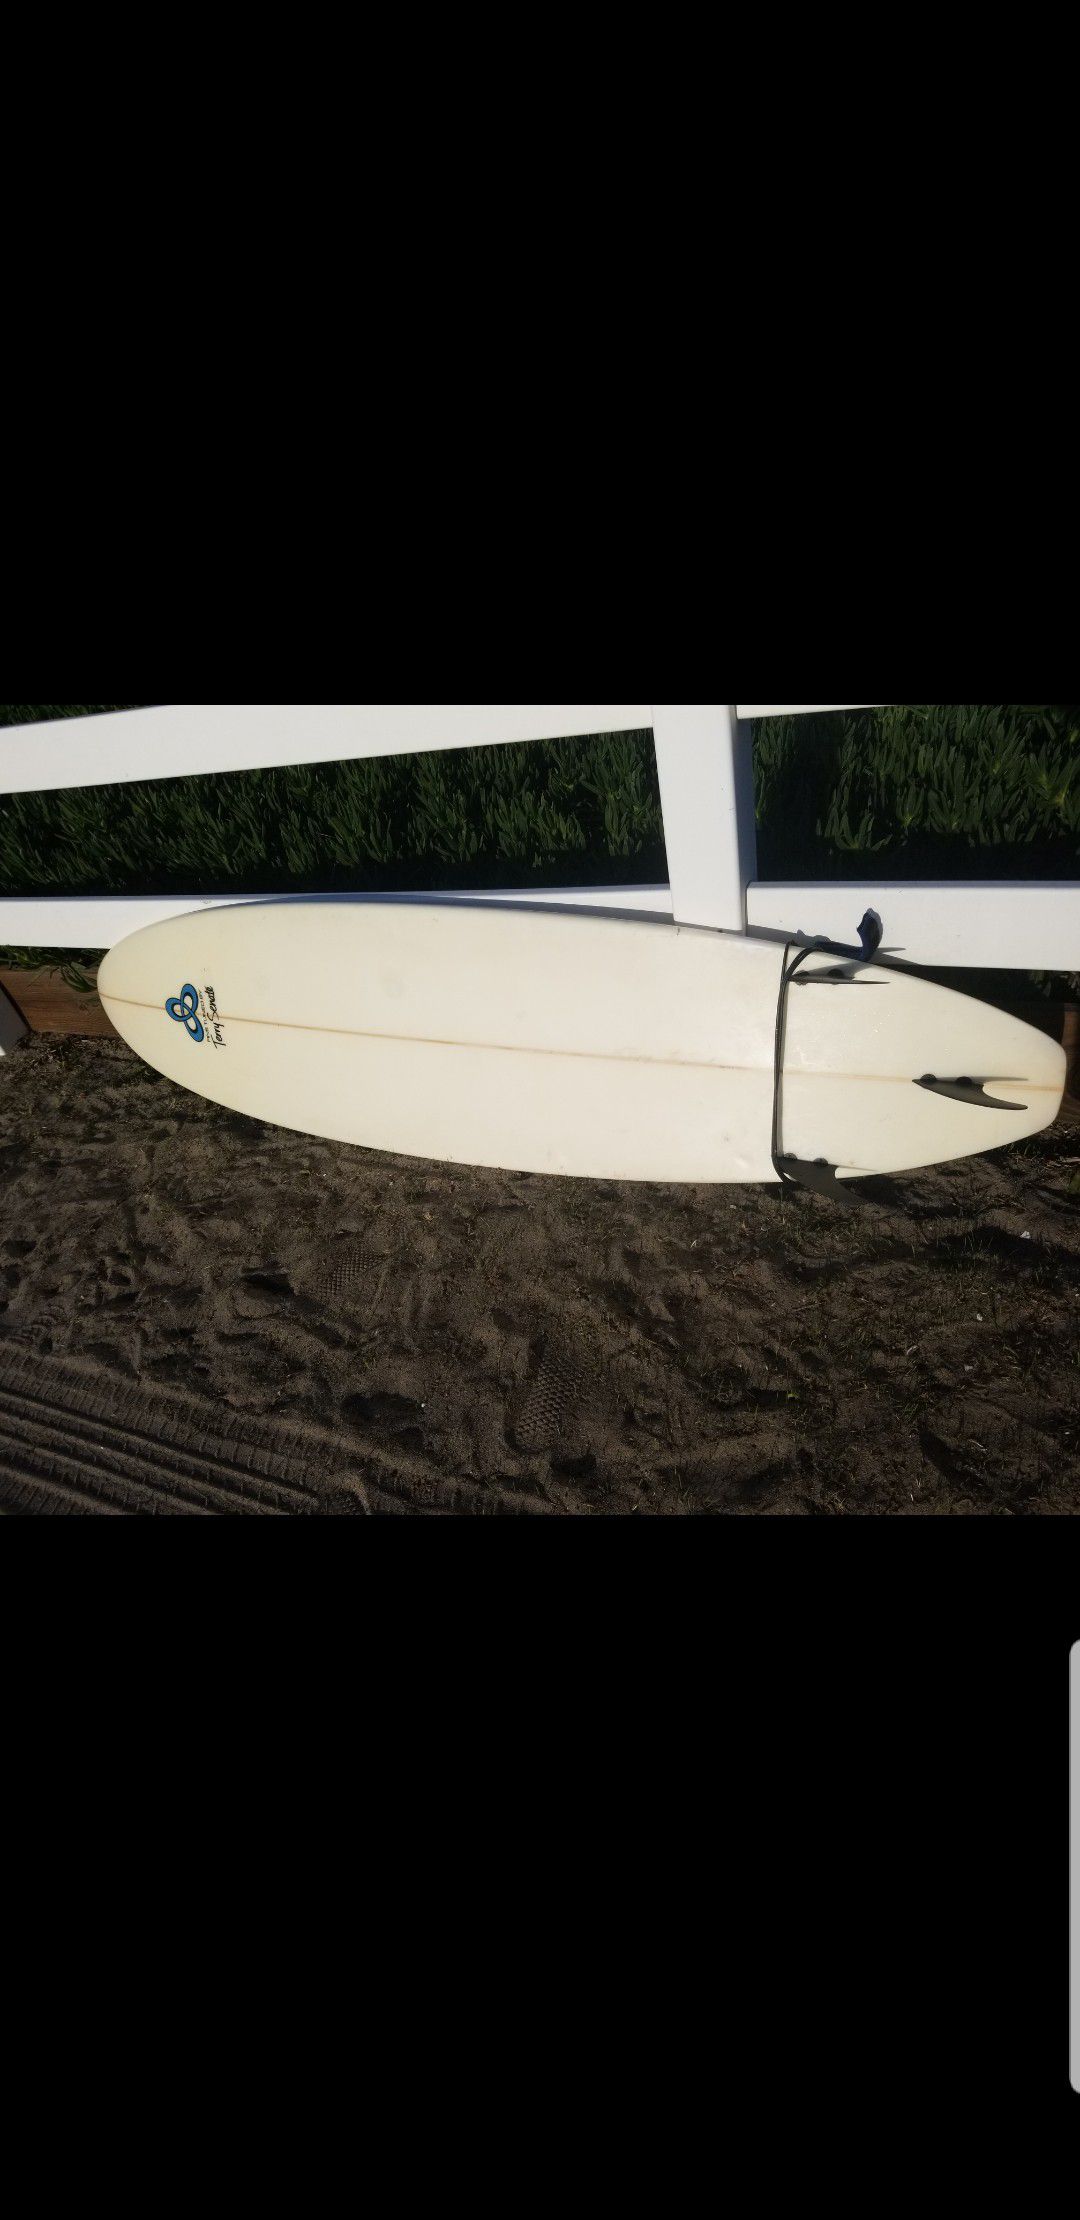 Surfboard 7'2" Terry senate